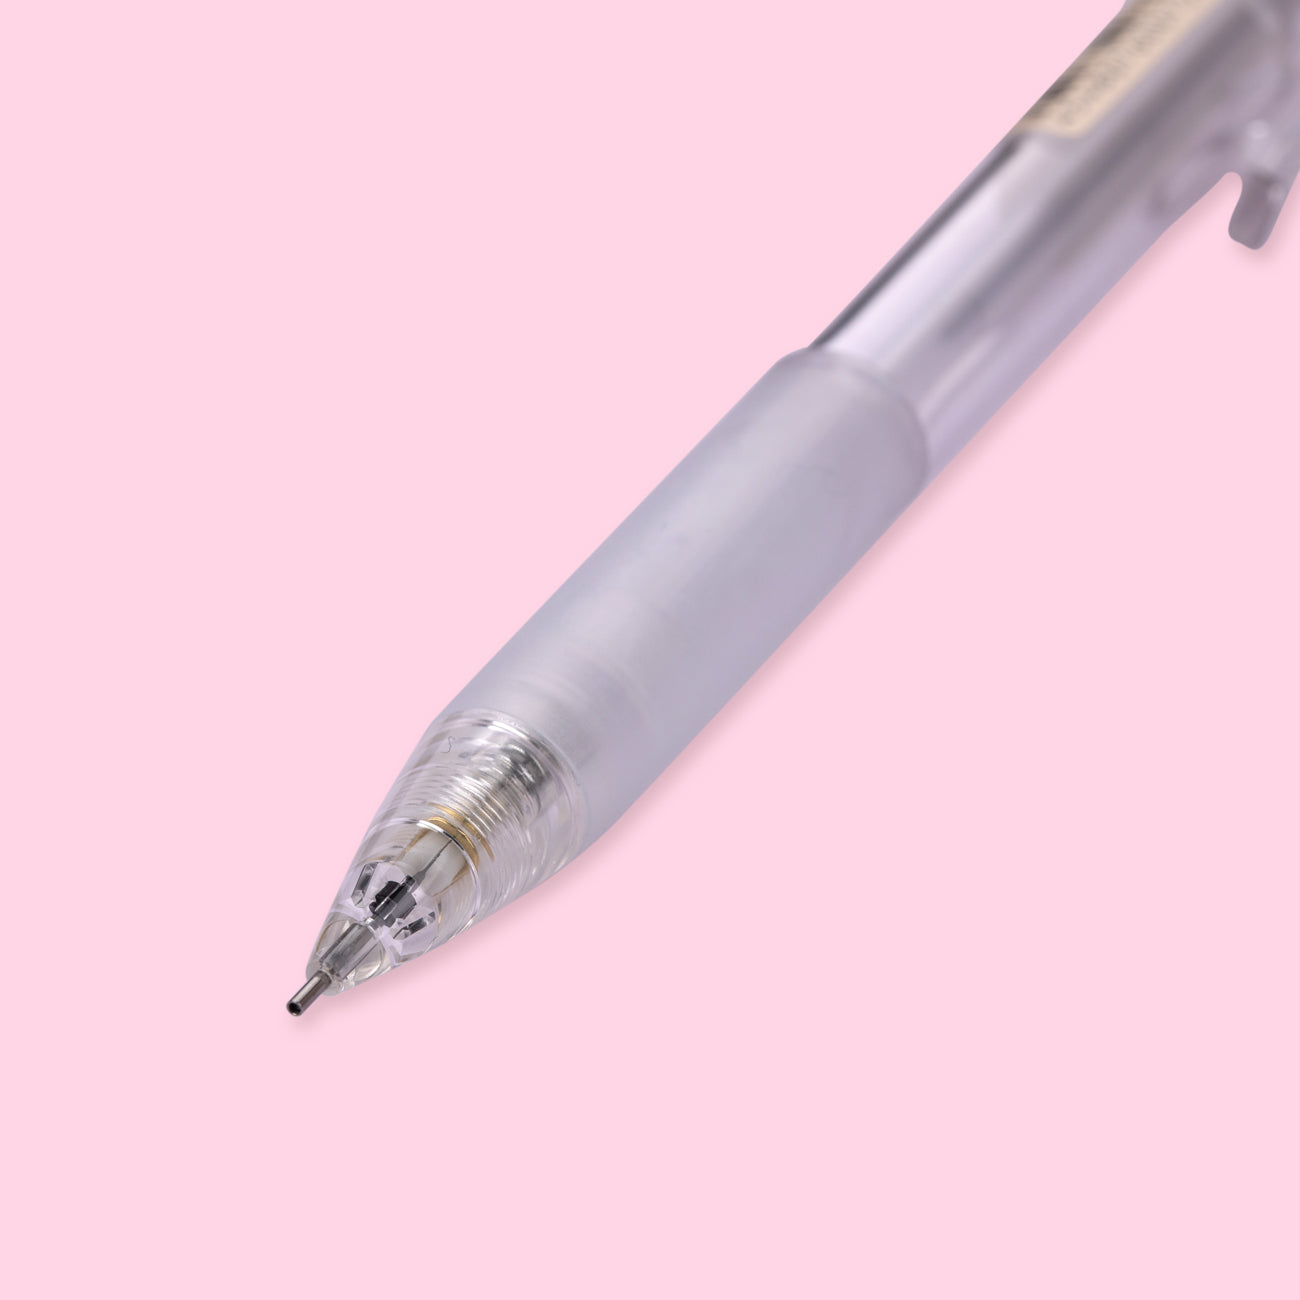 MUJI Stationery Set (Pen Case, Mechanical Pen, Ballpoint Pen, Eraser, Ruler)